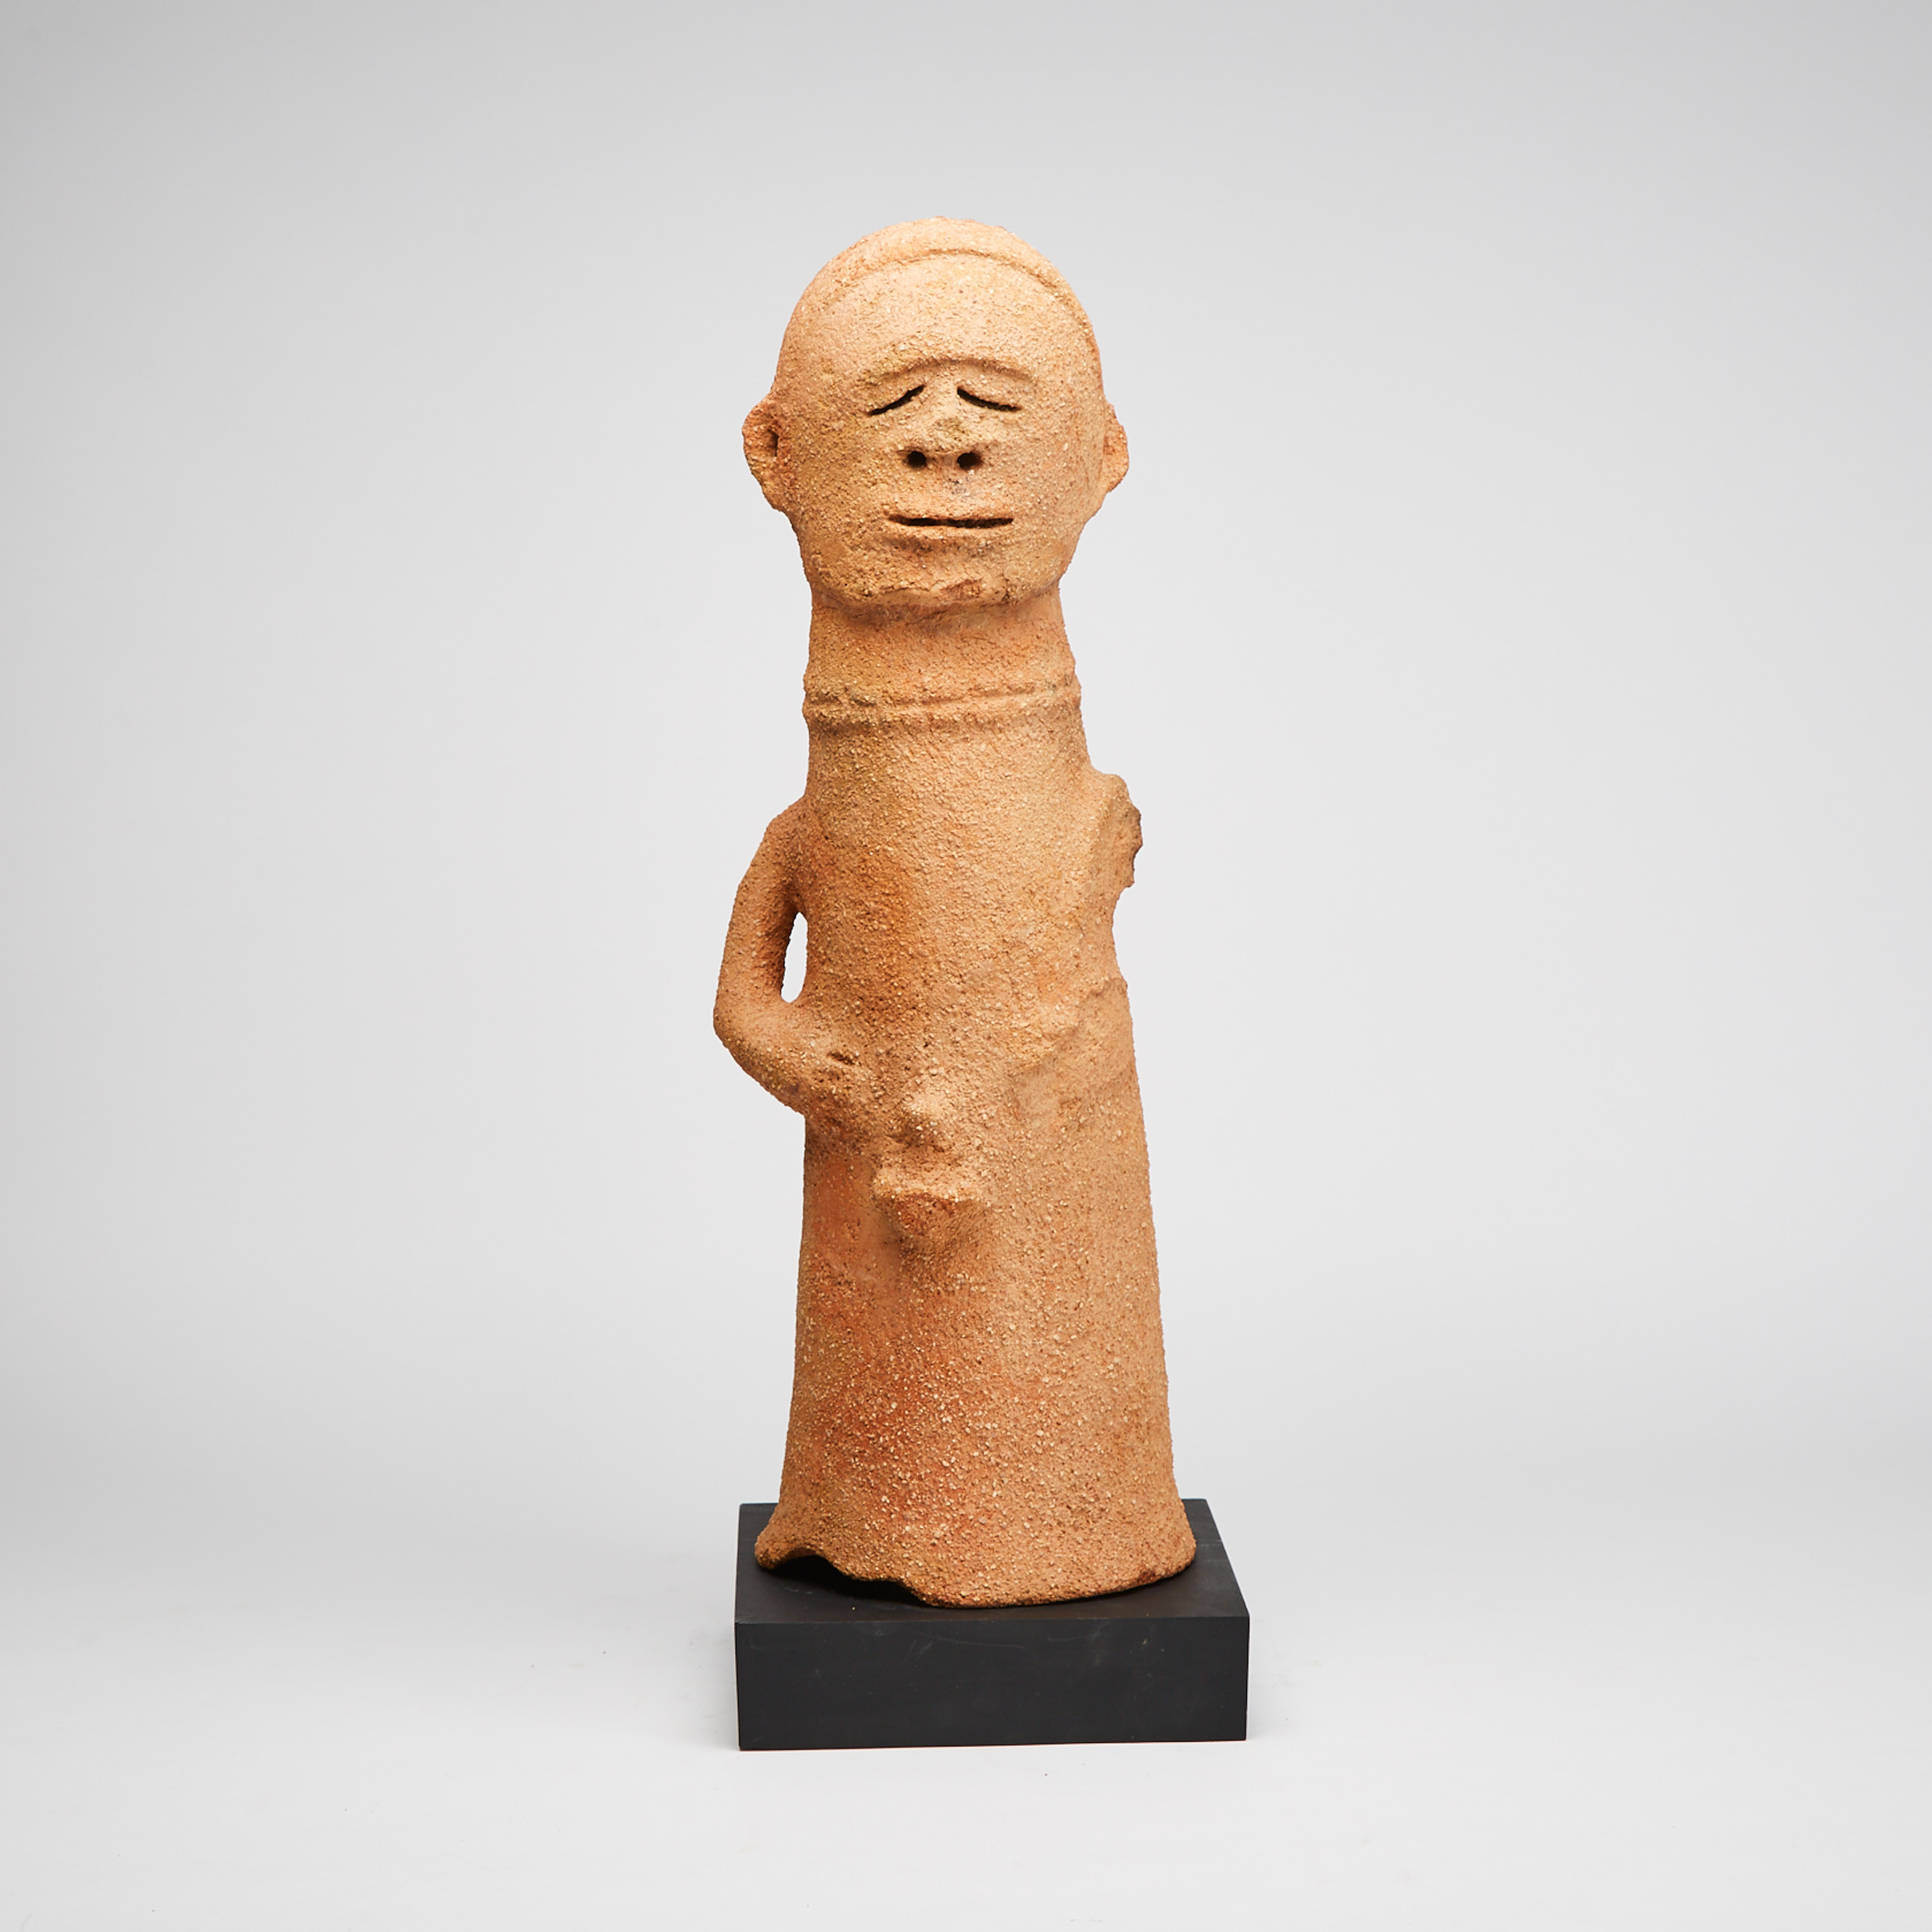 Terra Cotta Figure, possibly Katsina or Sokoto, Nigeria, West Africa